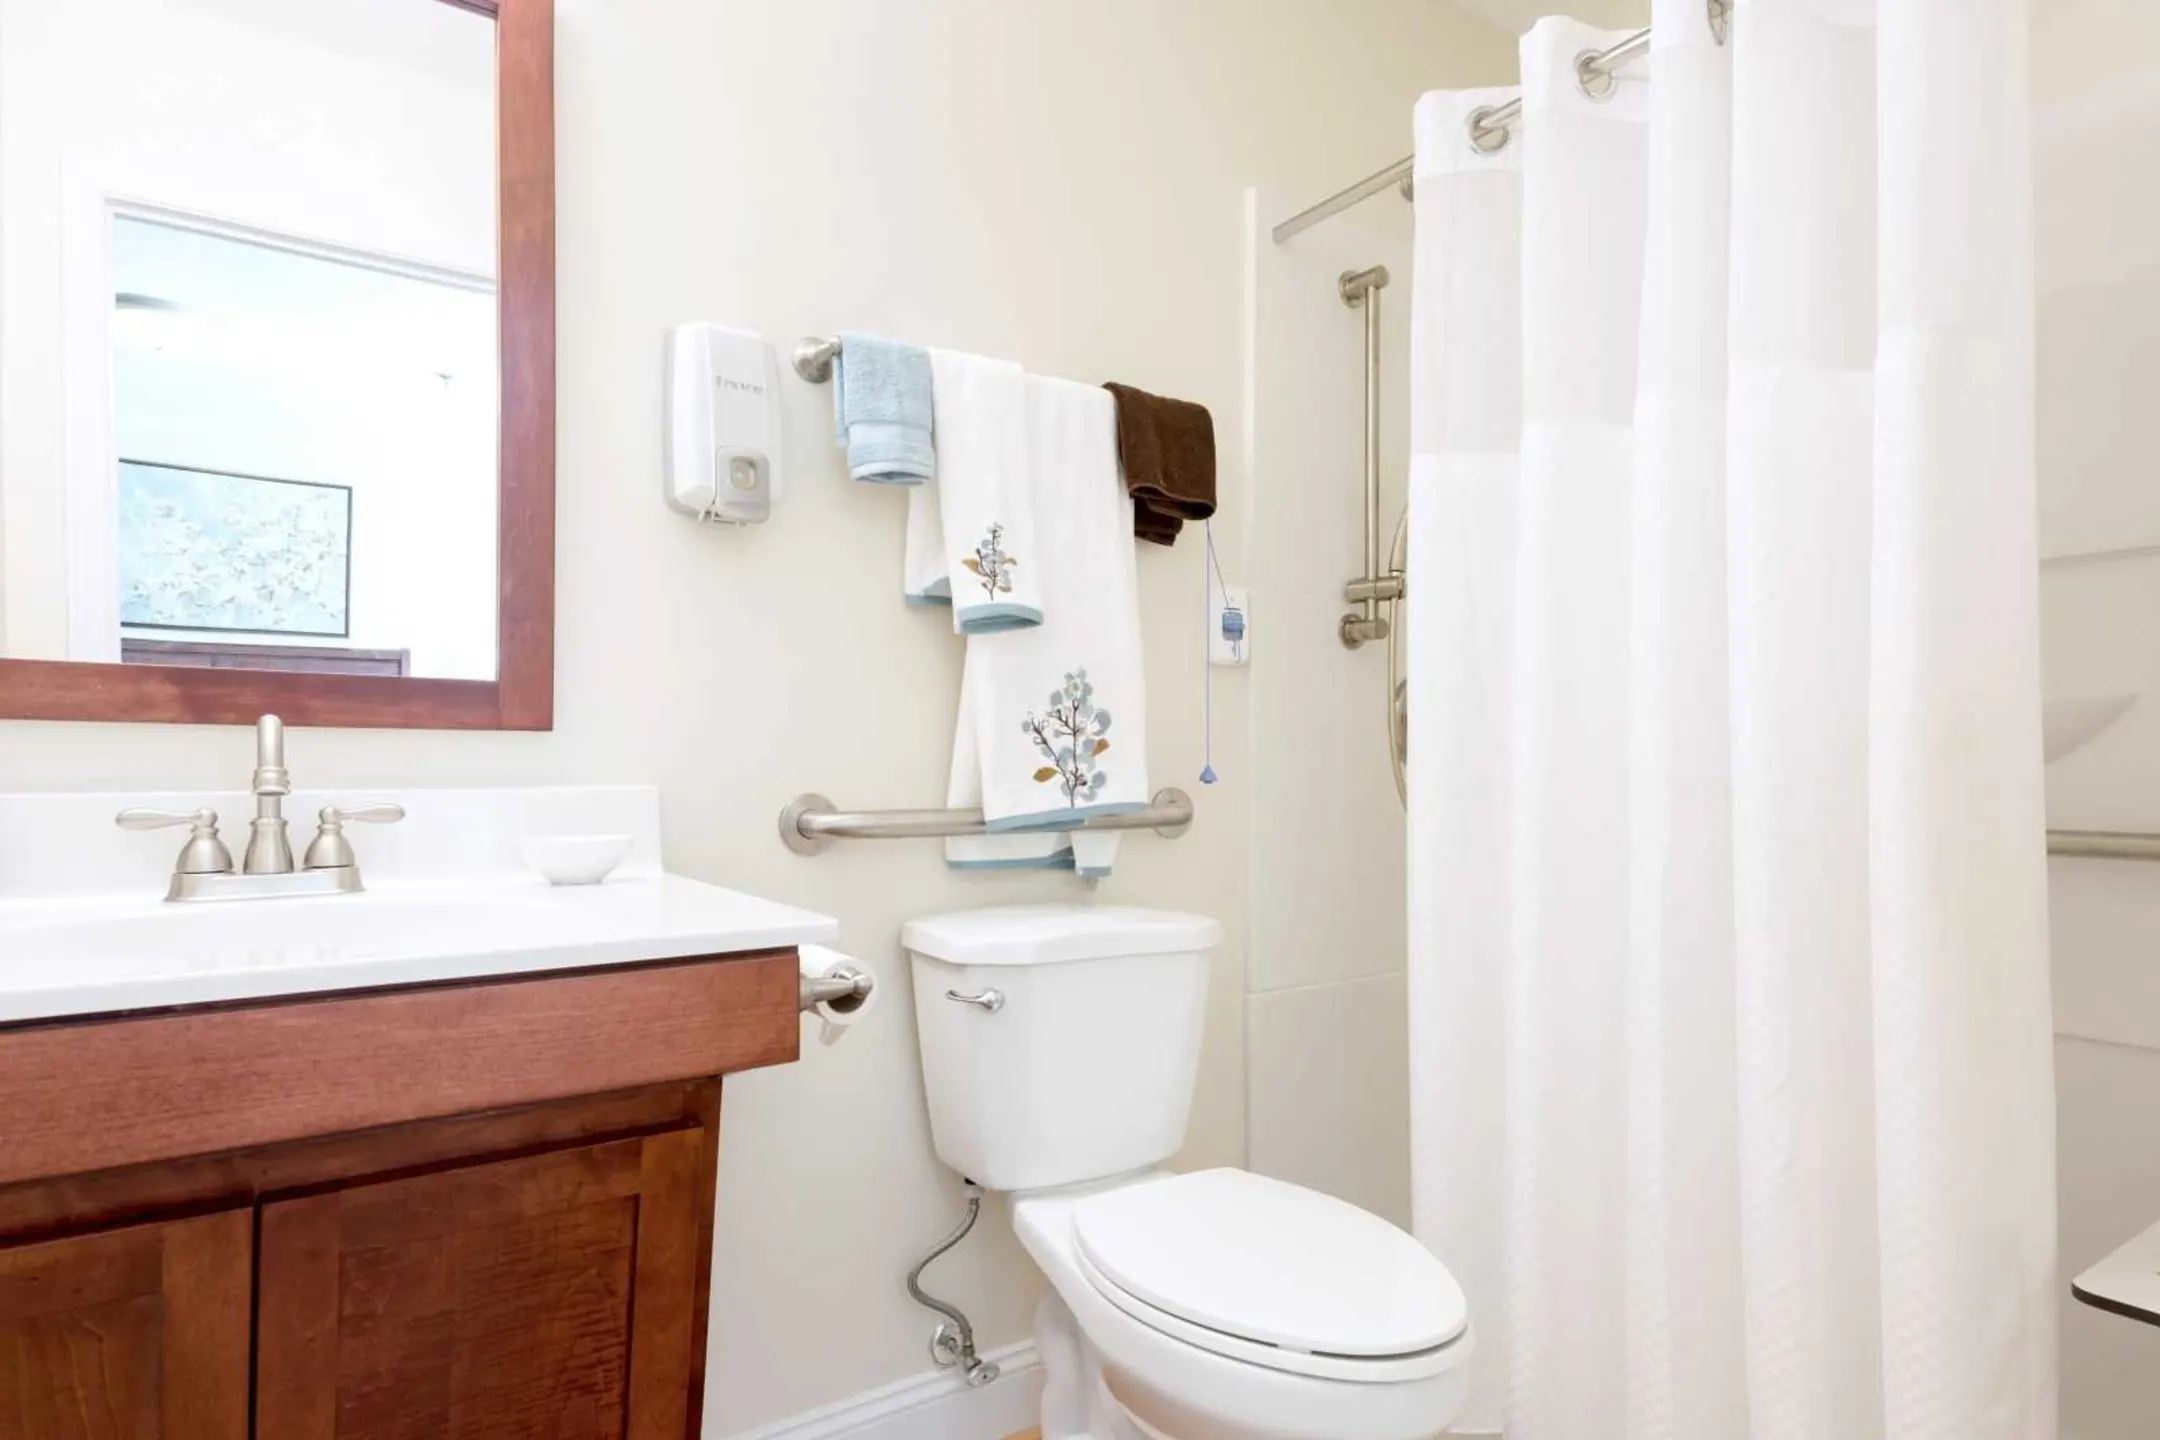 Bathroom - Commonwealth Living at Radford - Radford, VA